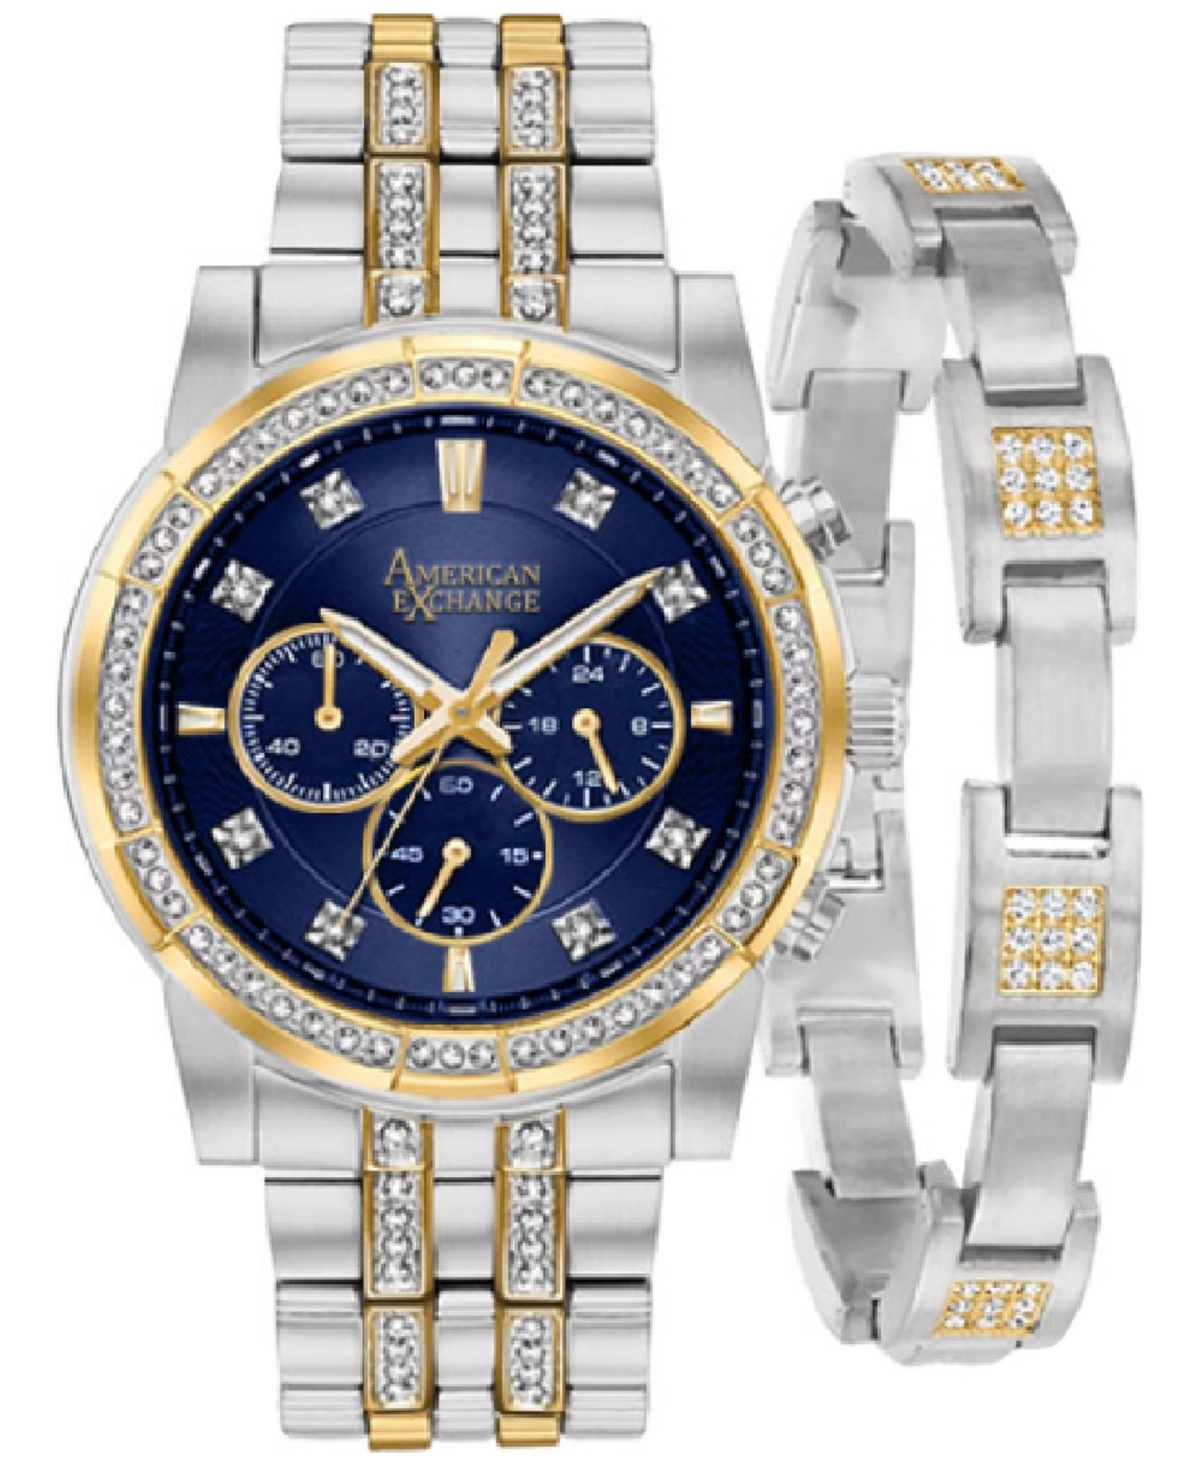 American Exchange Men's Crystal Bracelet Watch 46mm Gift Set In Gold